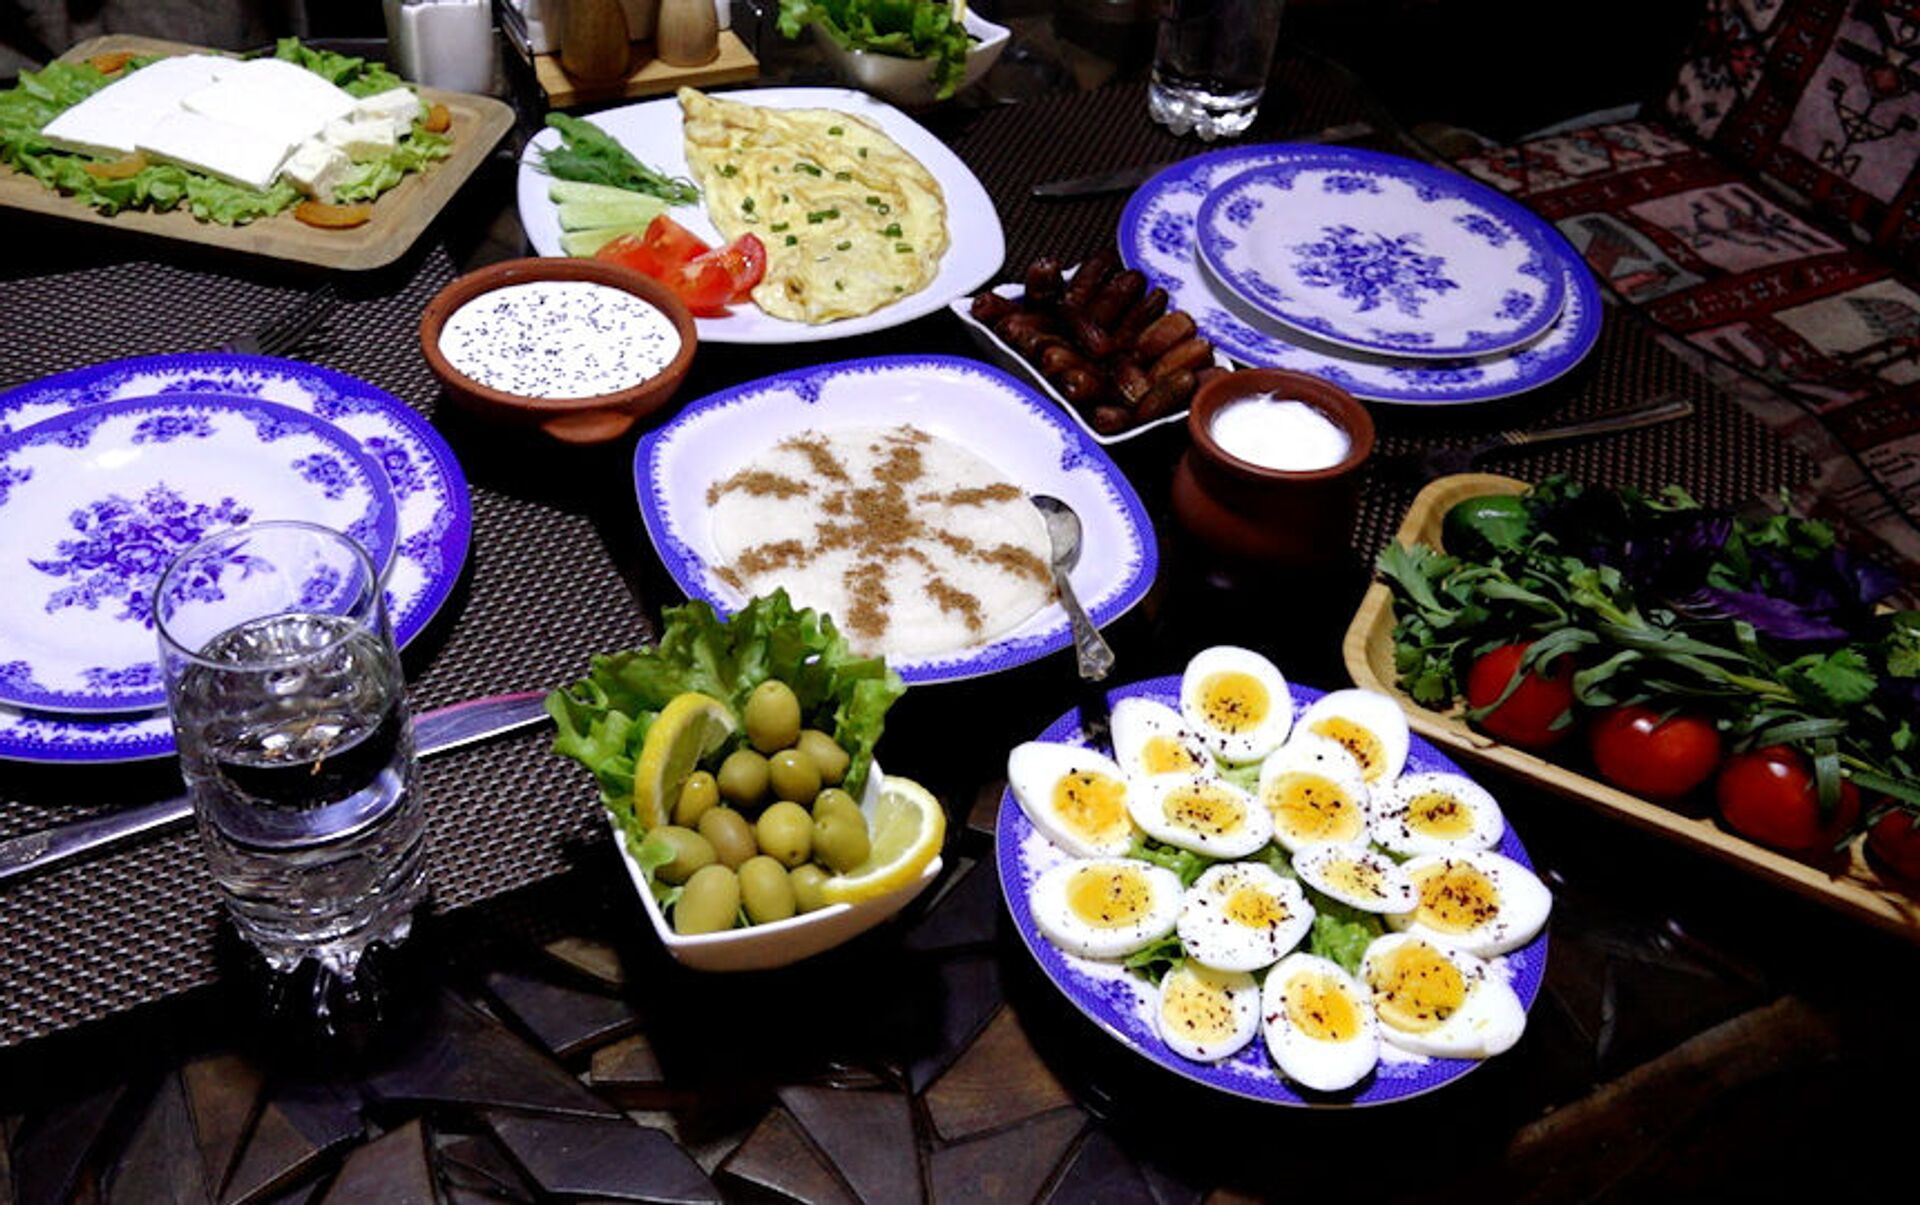 Рамазан меню. Блюда и салаты фон ифтар. Меню на Рамазан месяц. Фото стола на сухур.